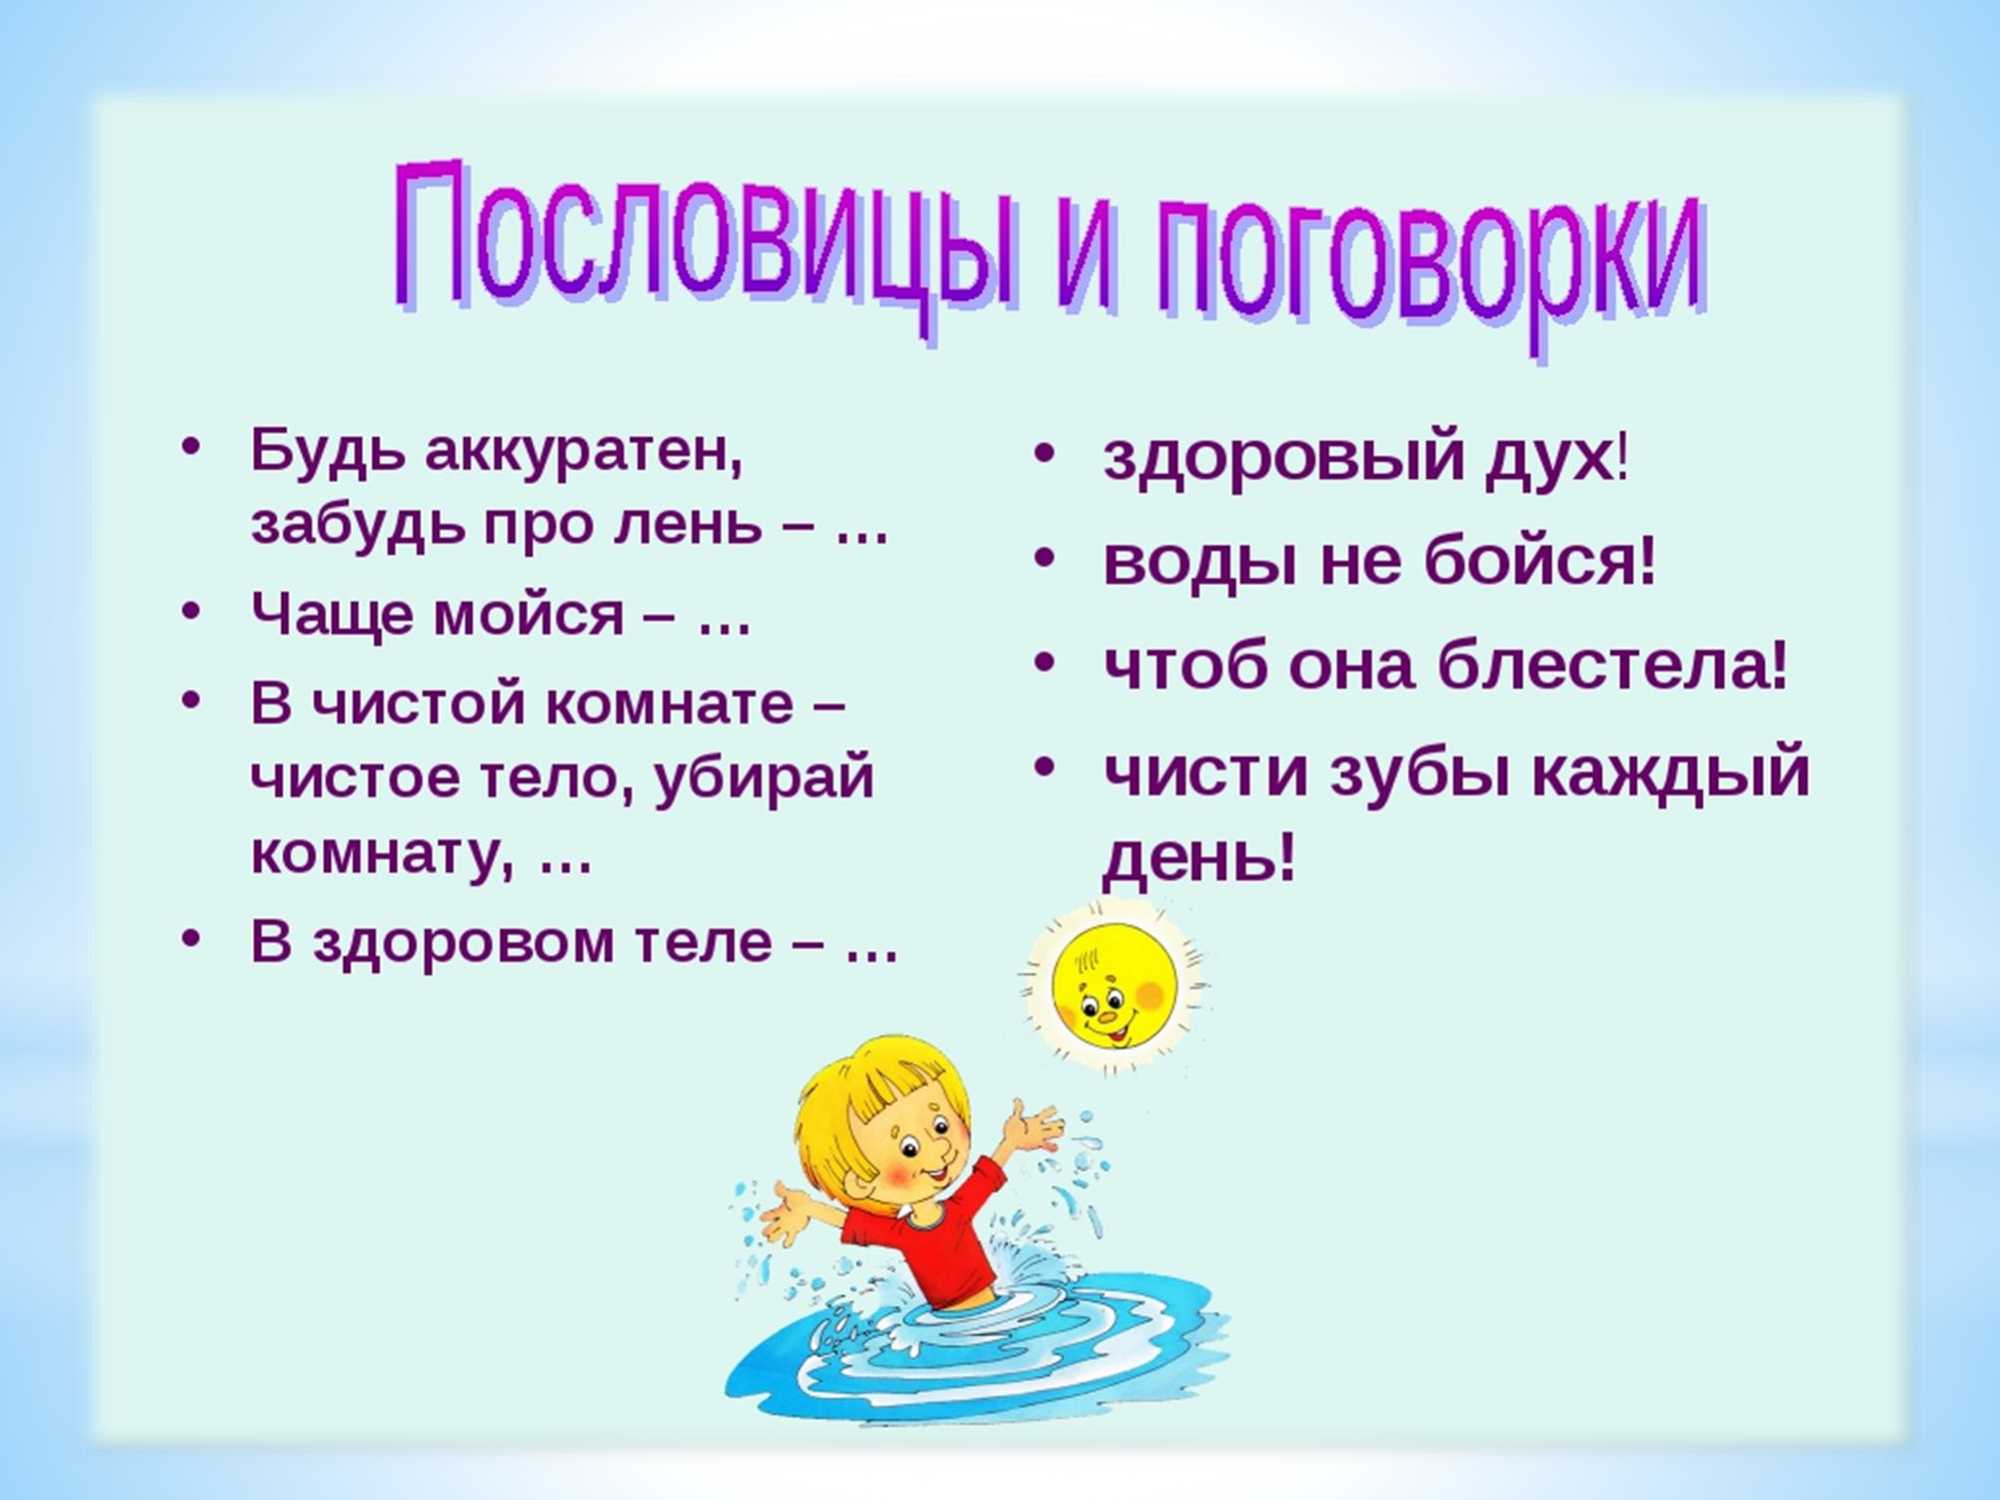 Чистота залог здоровья пословицы — priuta.ru